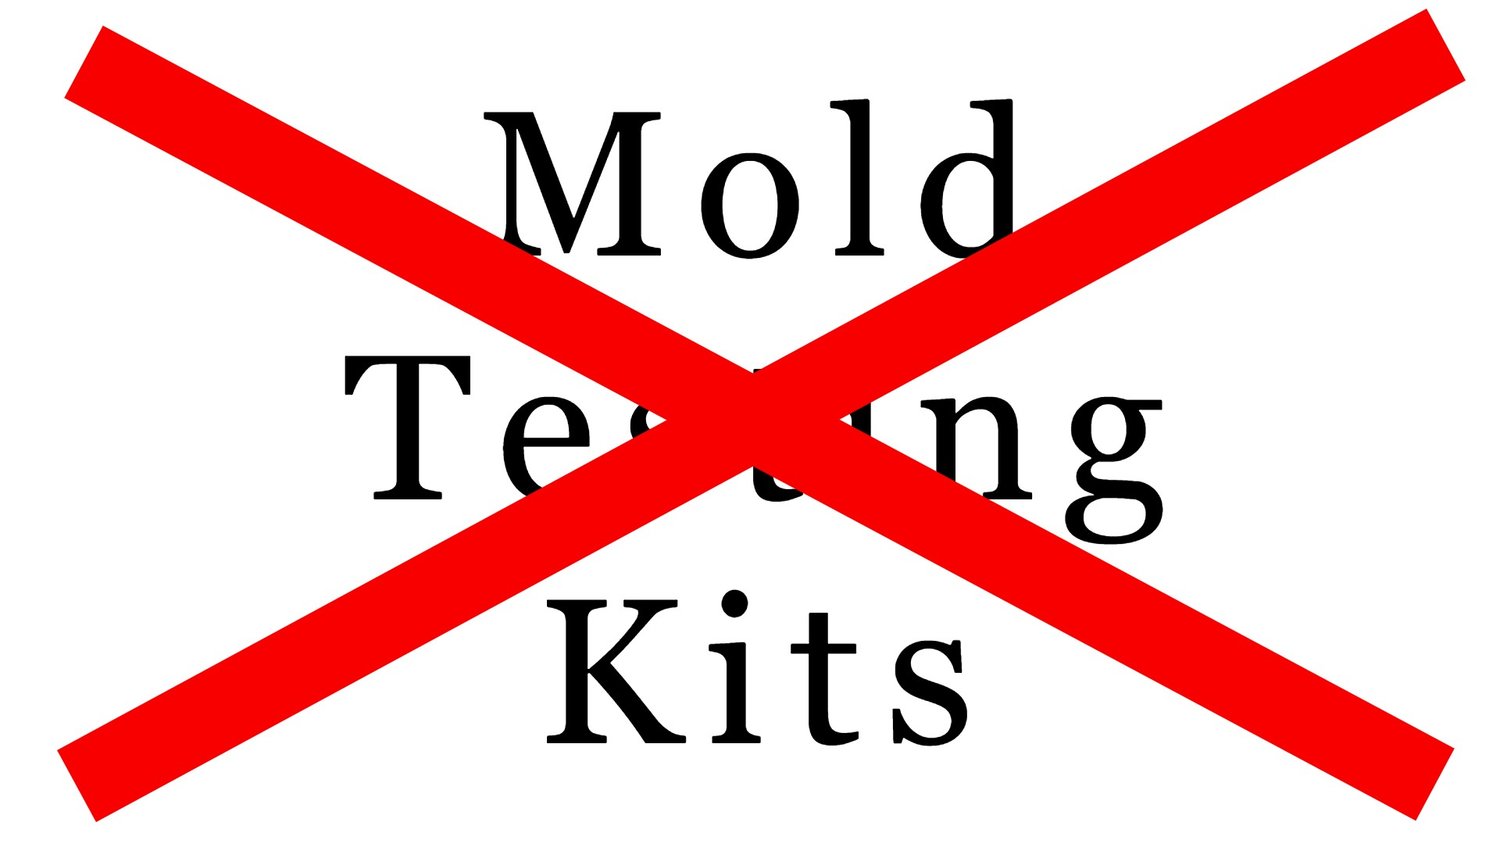  Mold Armor Do It Yourself Mold Test Kit : Health & Household